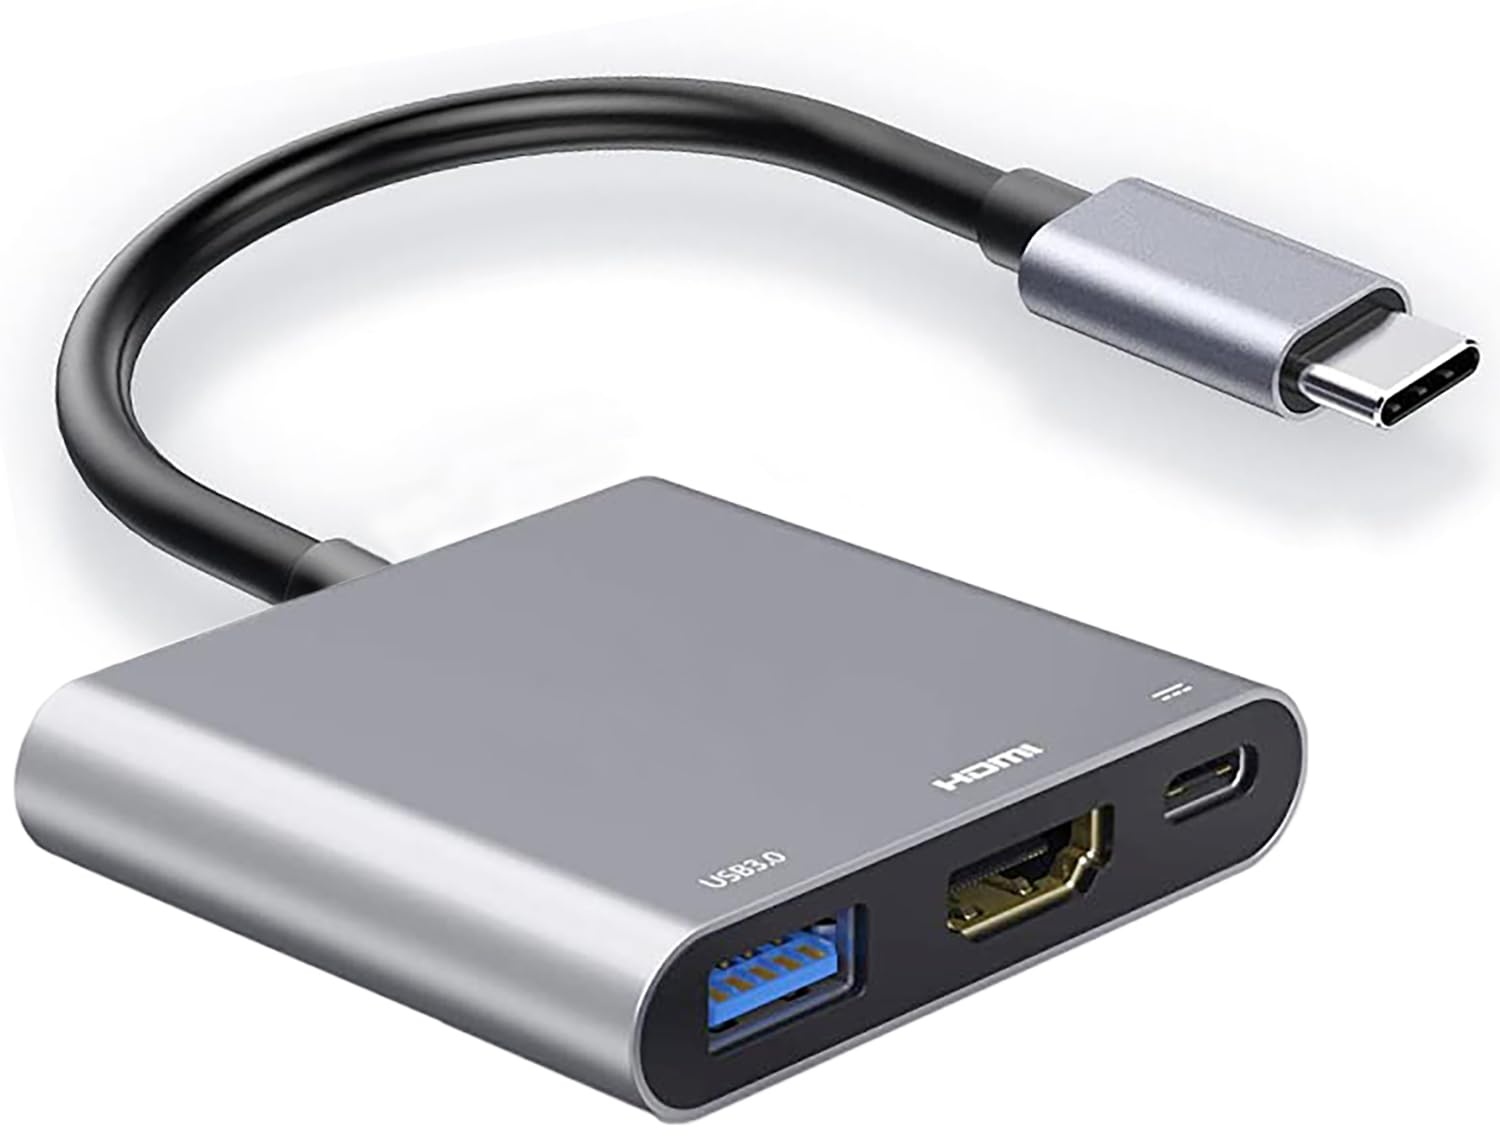 USB C Digital AV Multiport Adapter with HDMI 4K 60Hz Output & USB 3.0 Port & USB-C Fast Charging Port for Apple MacBook Pro M1 2016-2022 Air M1 2018-2022, iPad Pro iMac